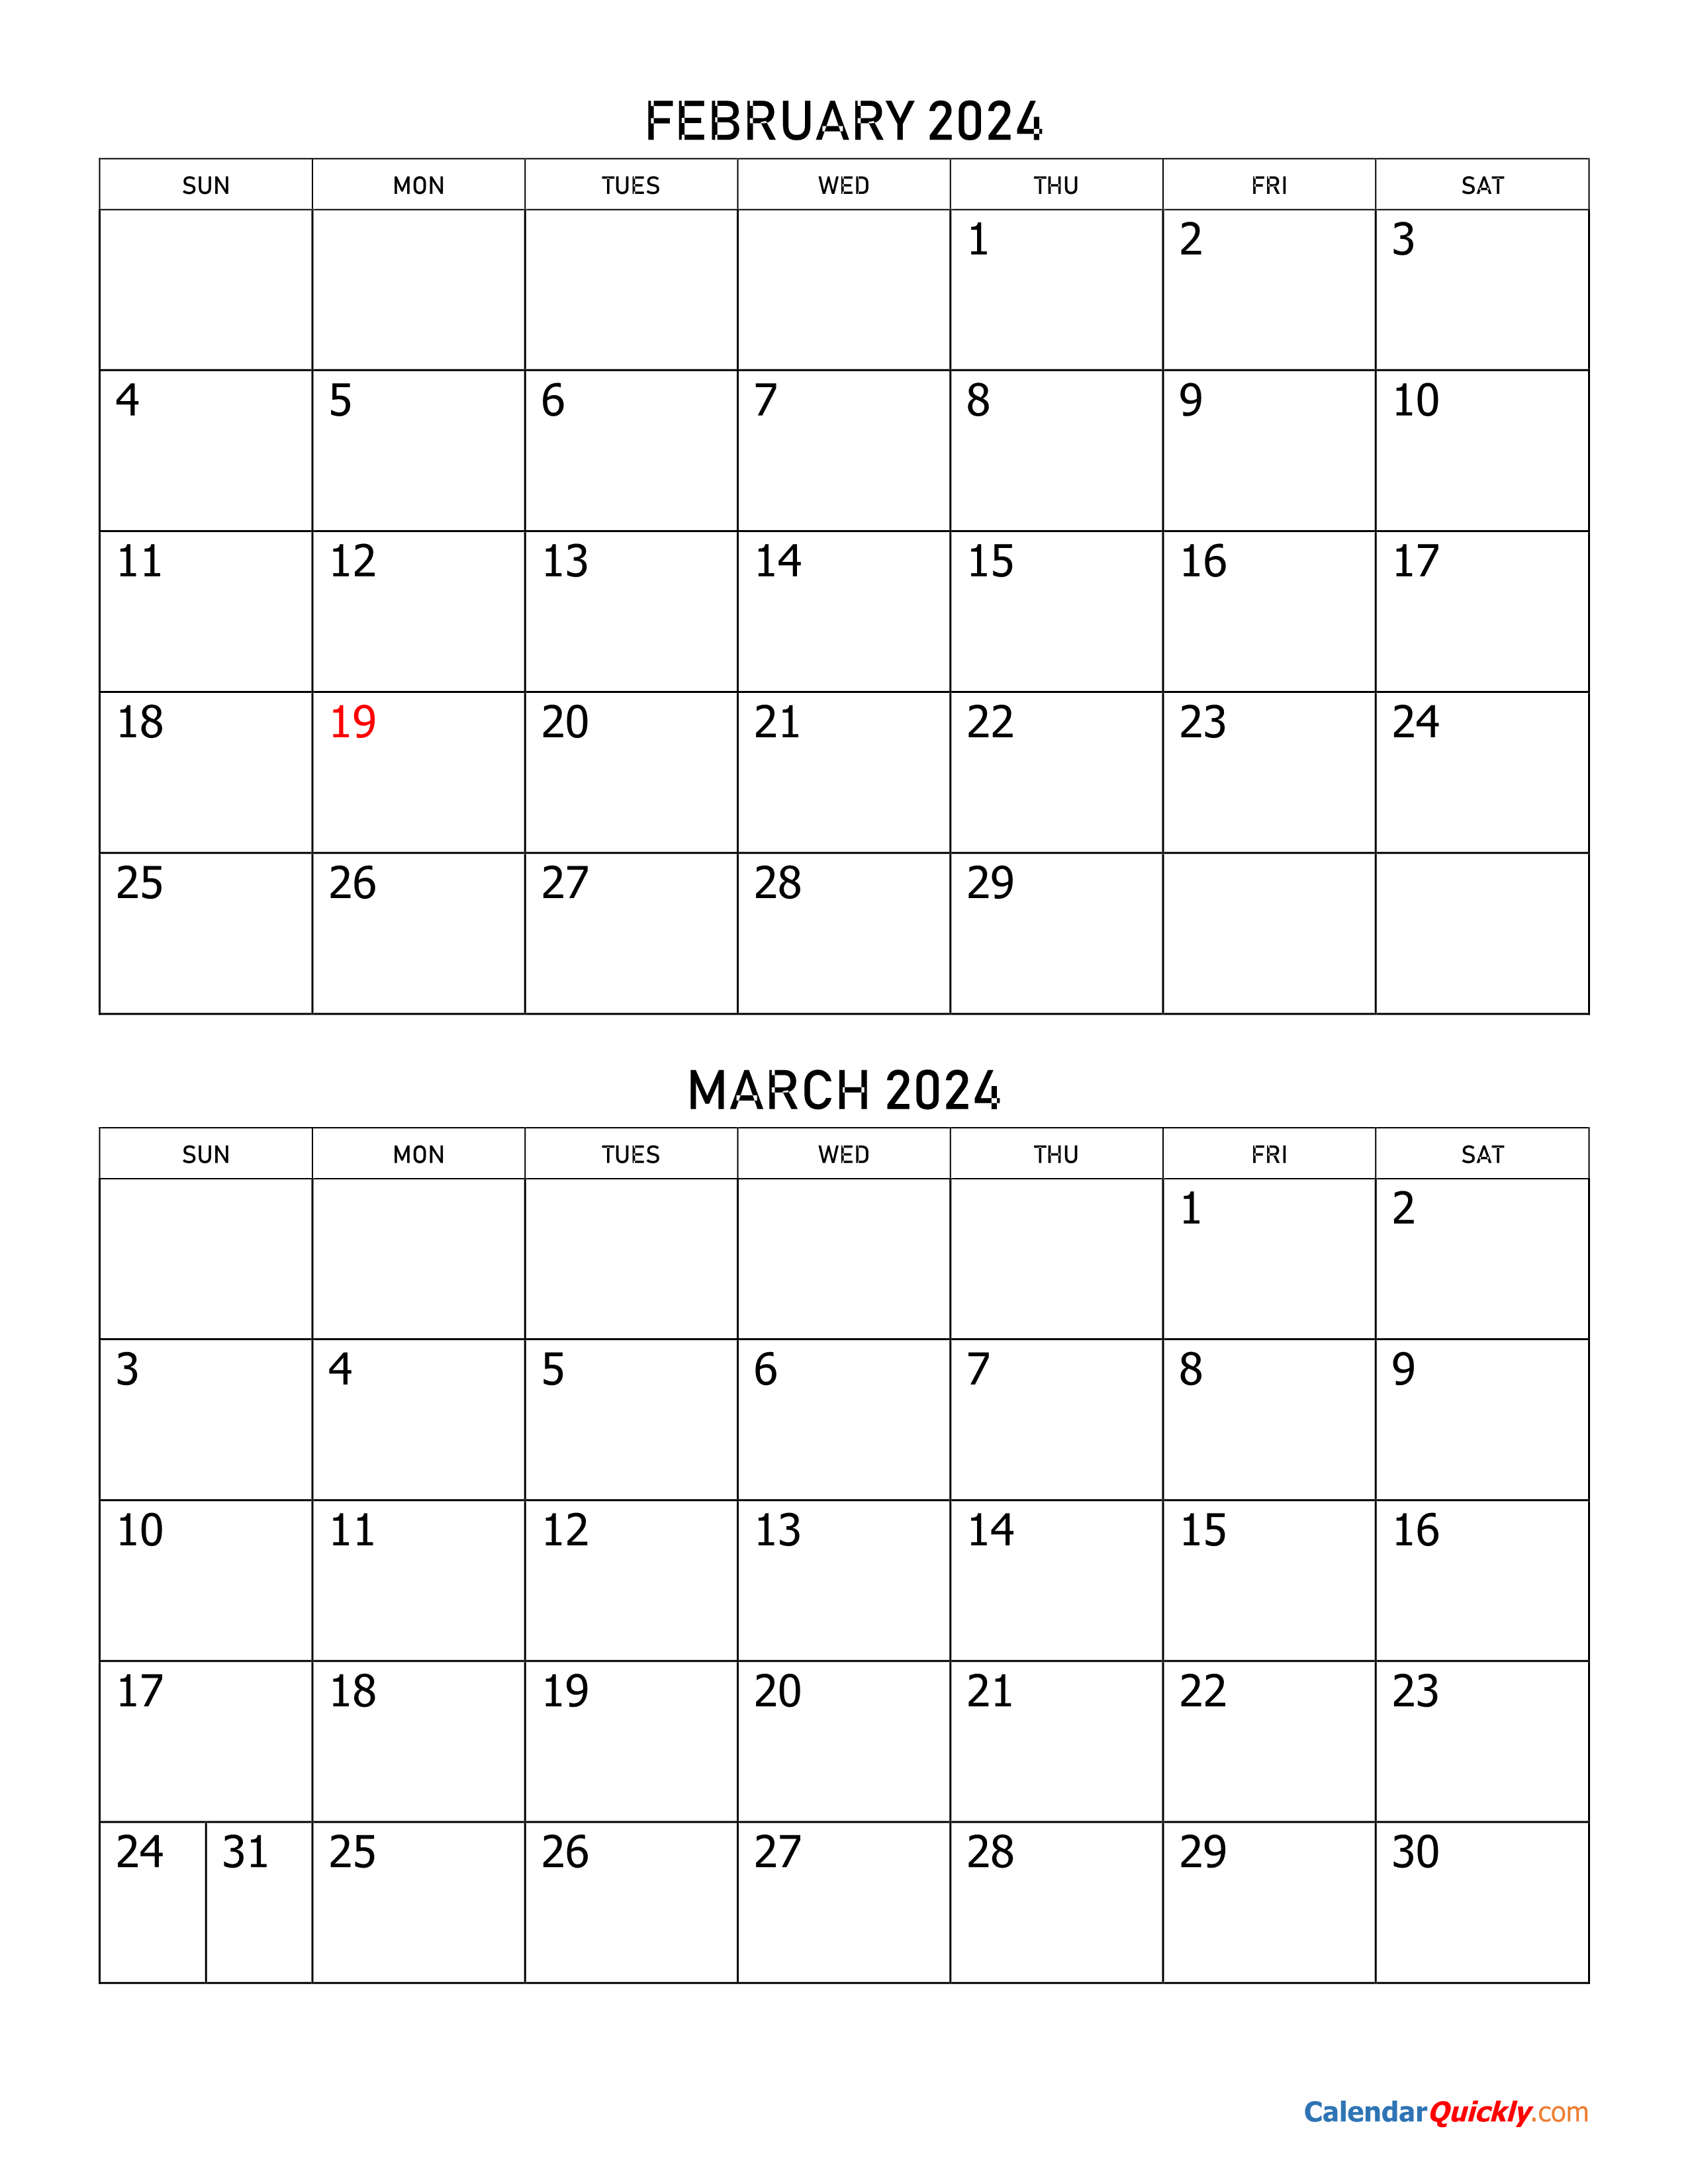 February and March 2024 Calendar Calendar Quickly